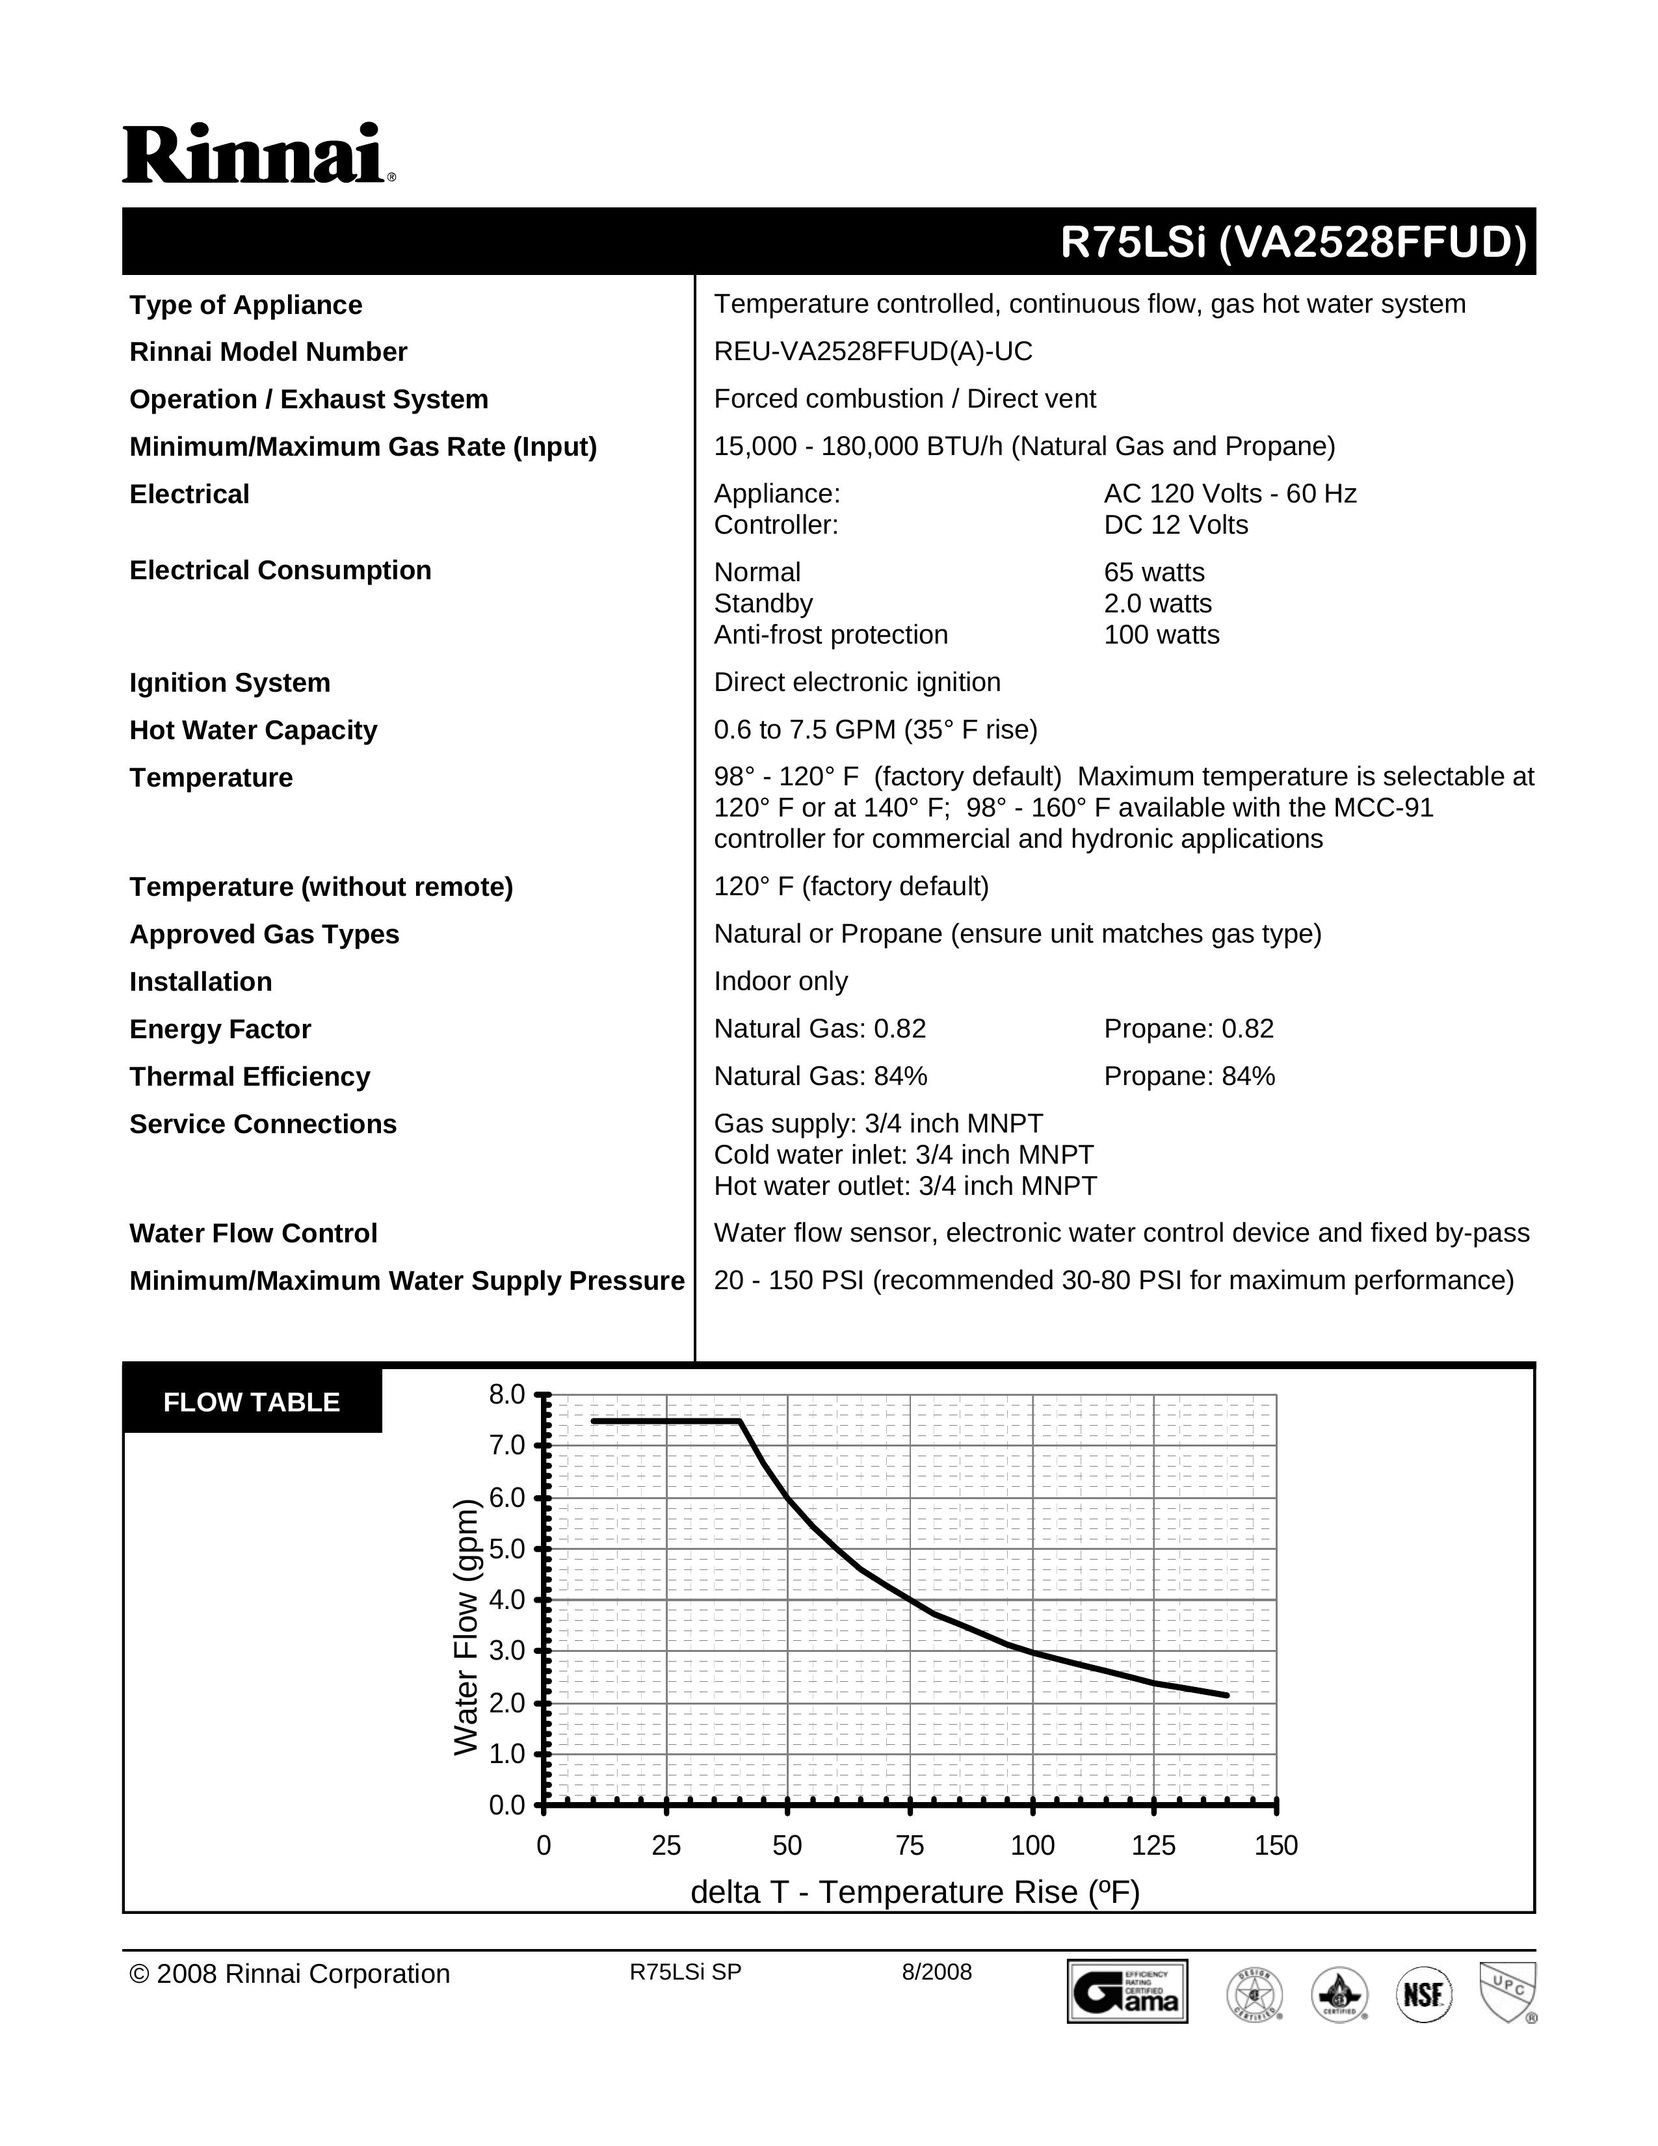 Rinnai R75LSI (VA2528FFUD) Water Heater User Manual